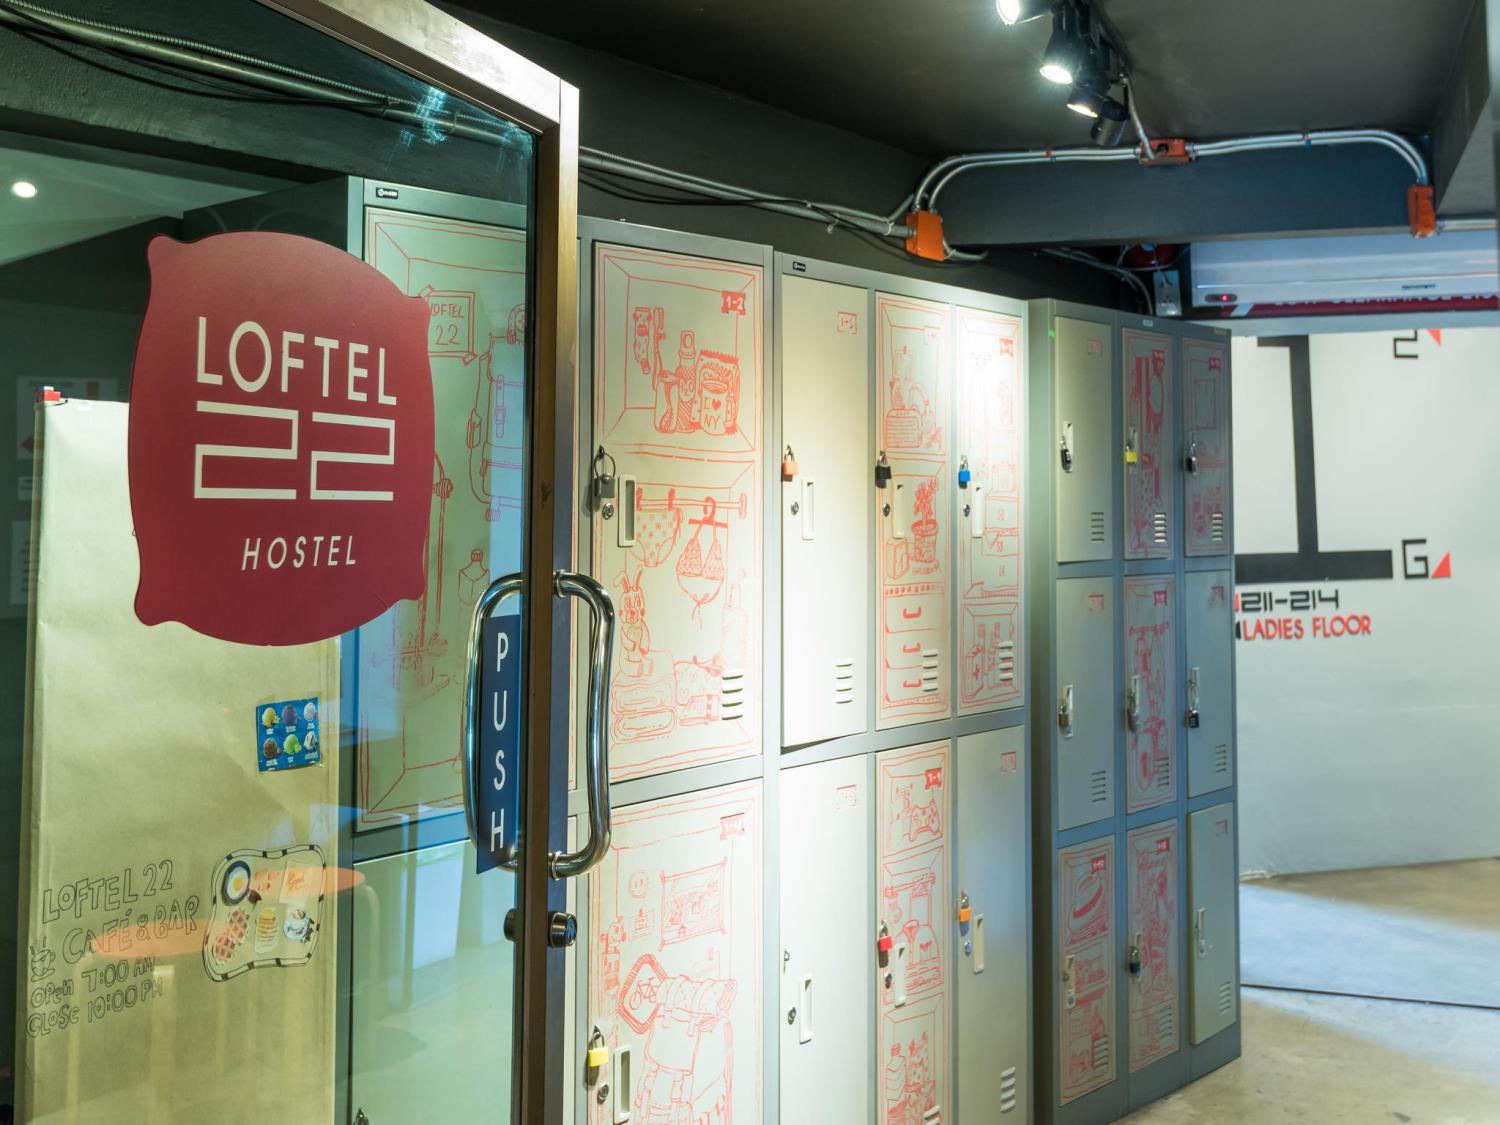 Loftel 22 Hostel - Image 5